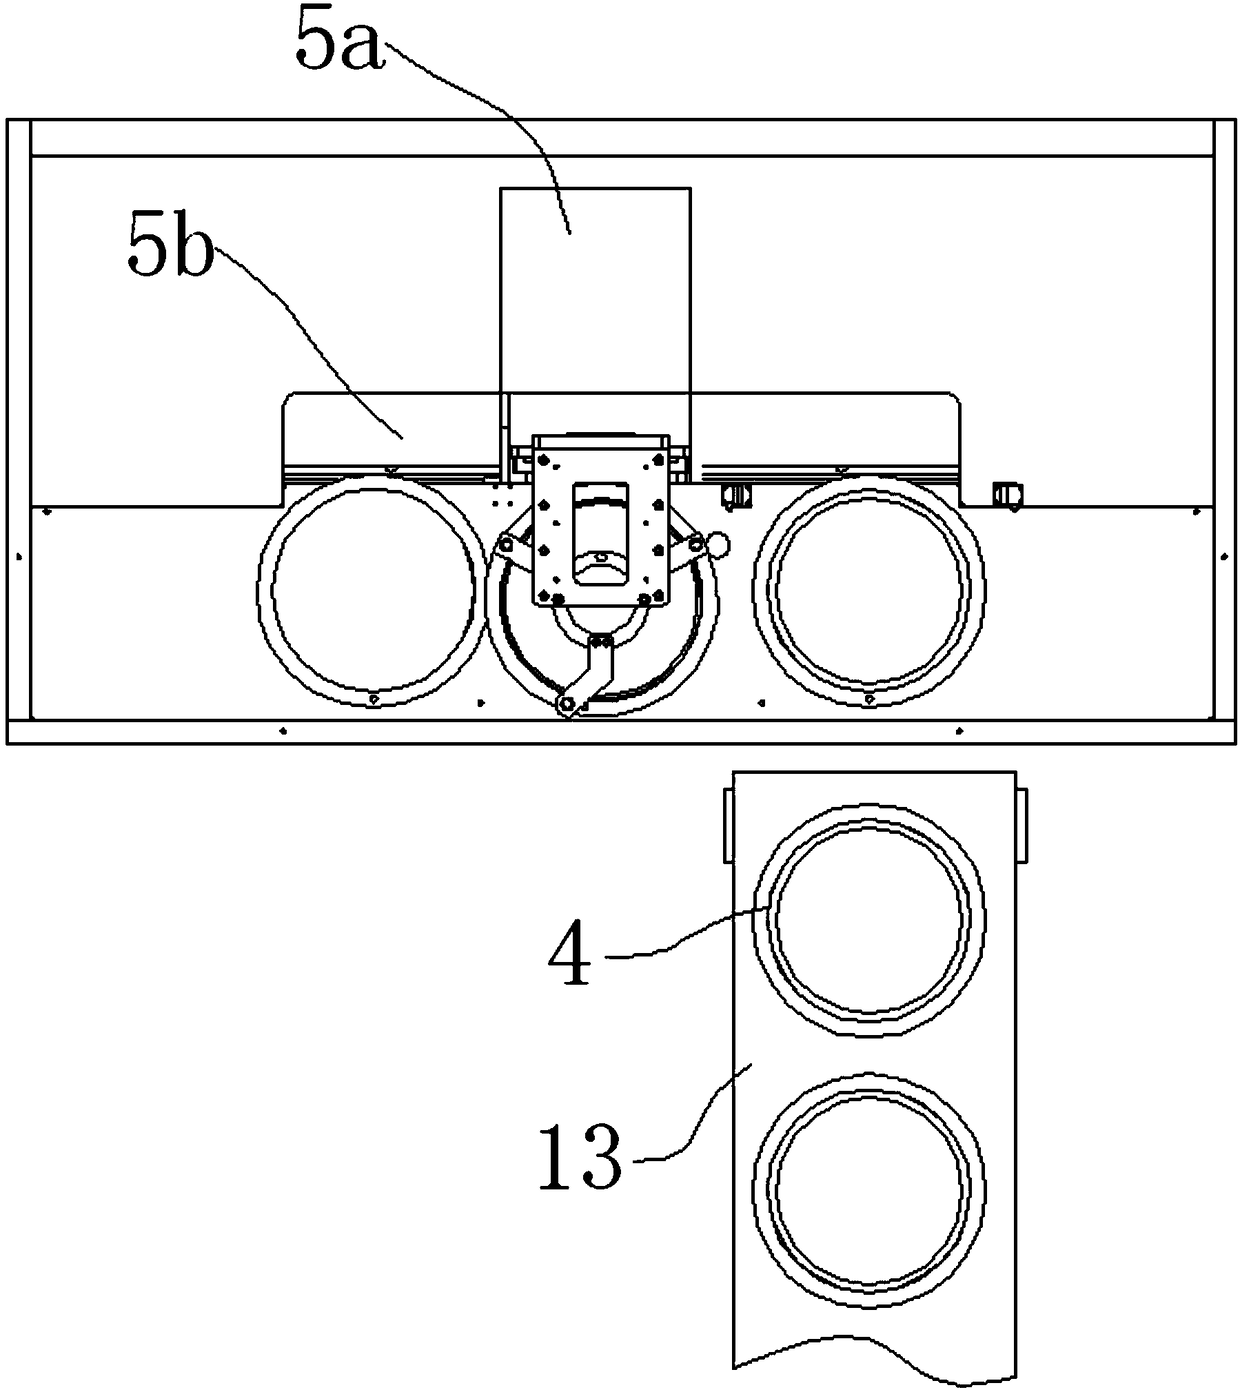 Flexible film carrying plate transport mechanism